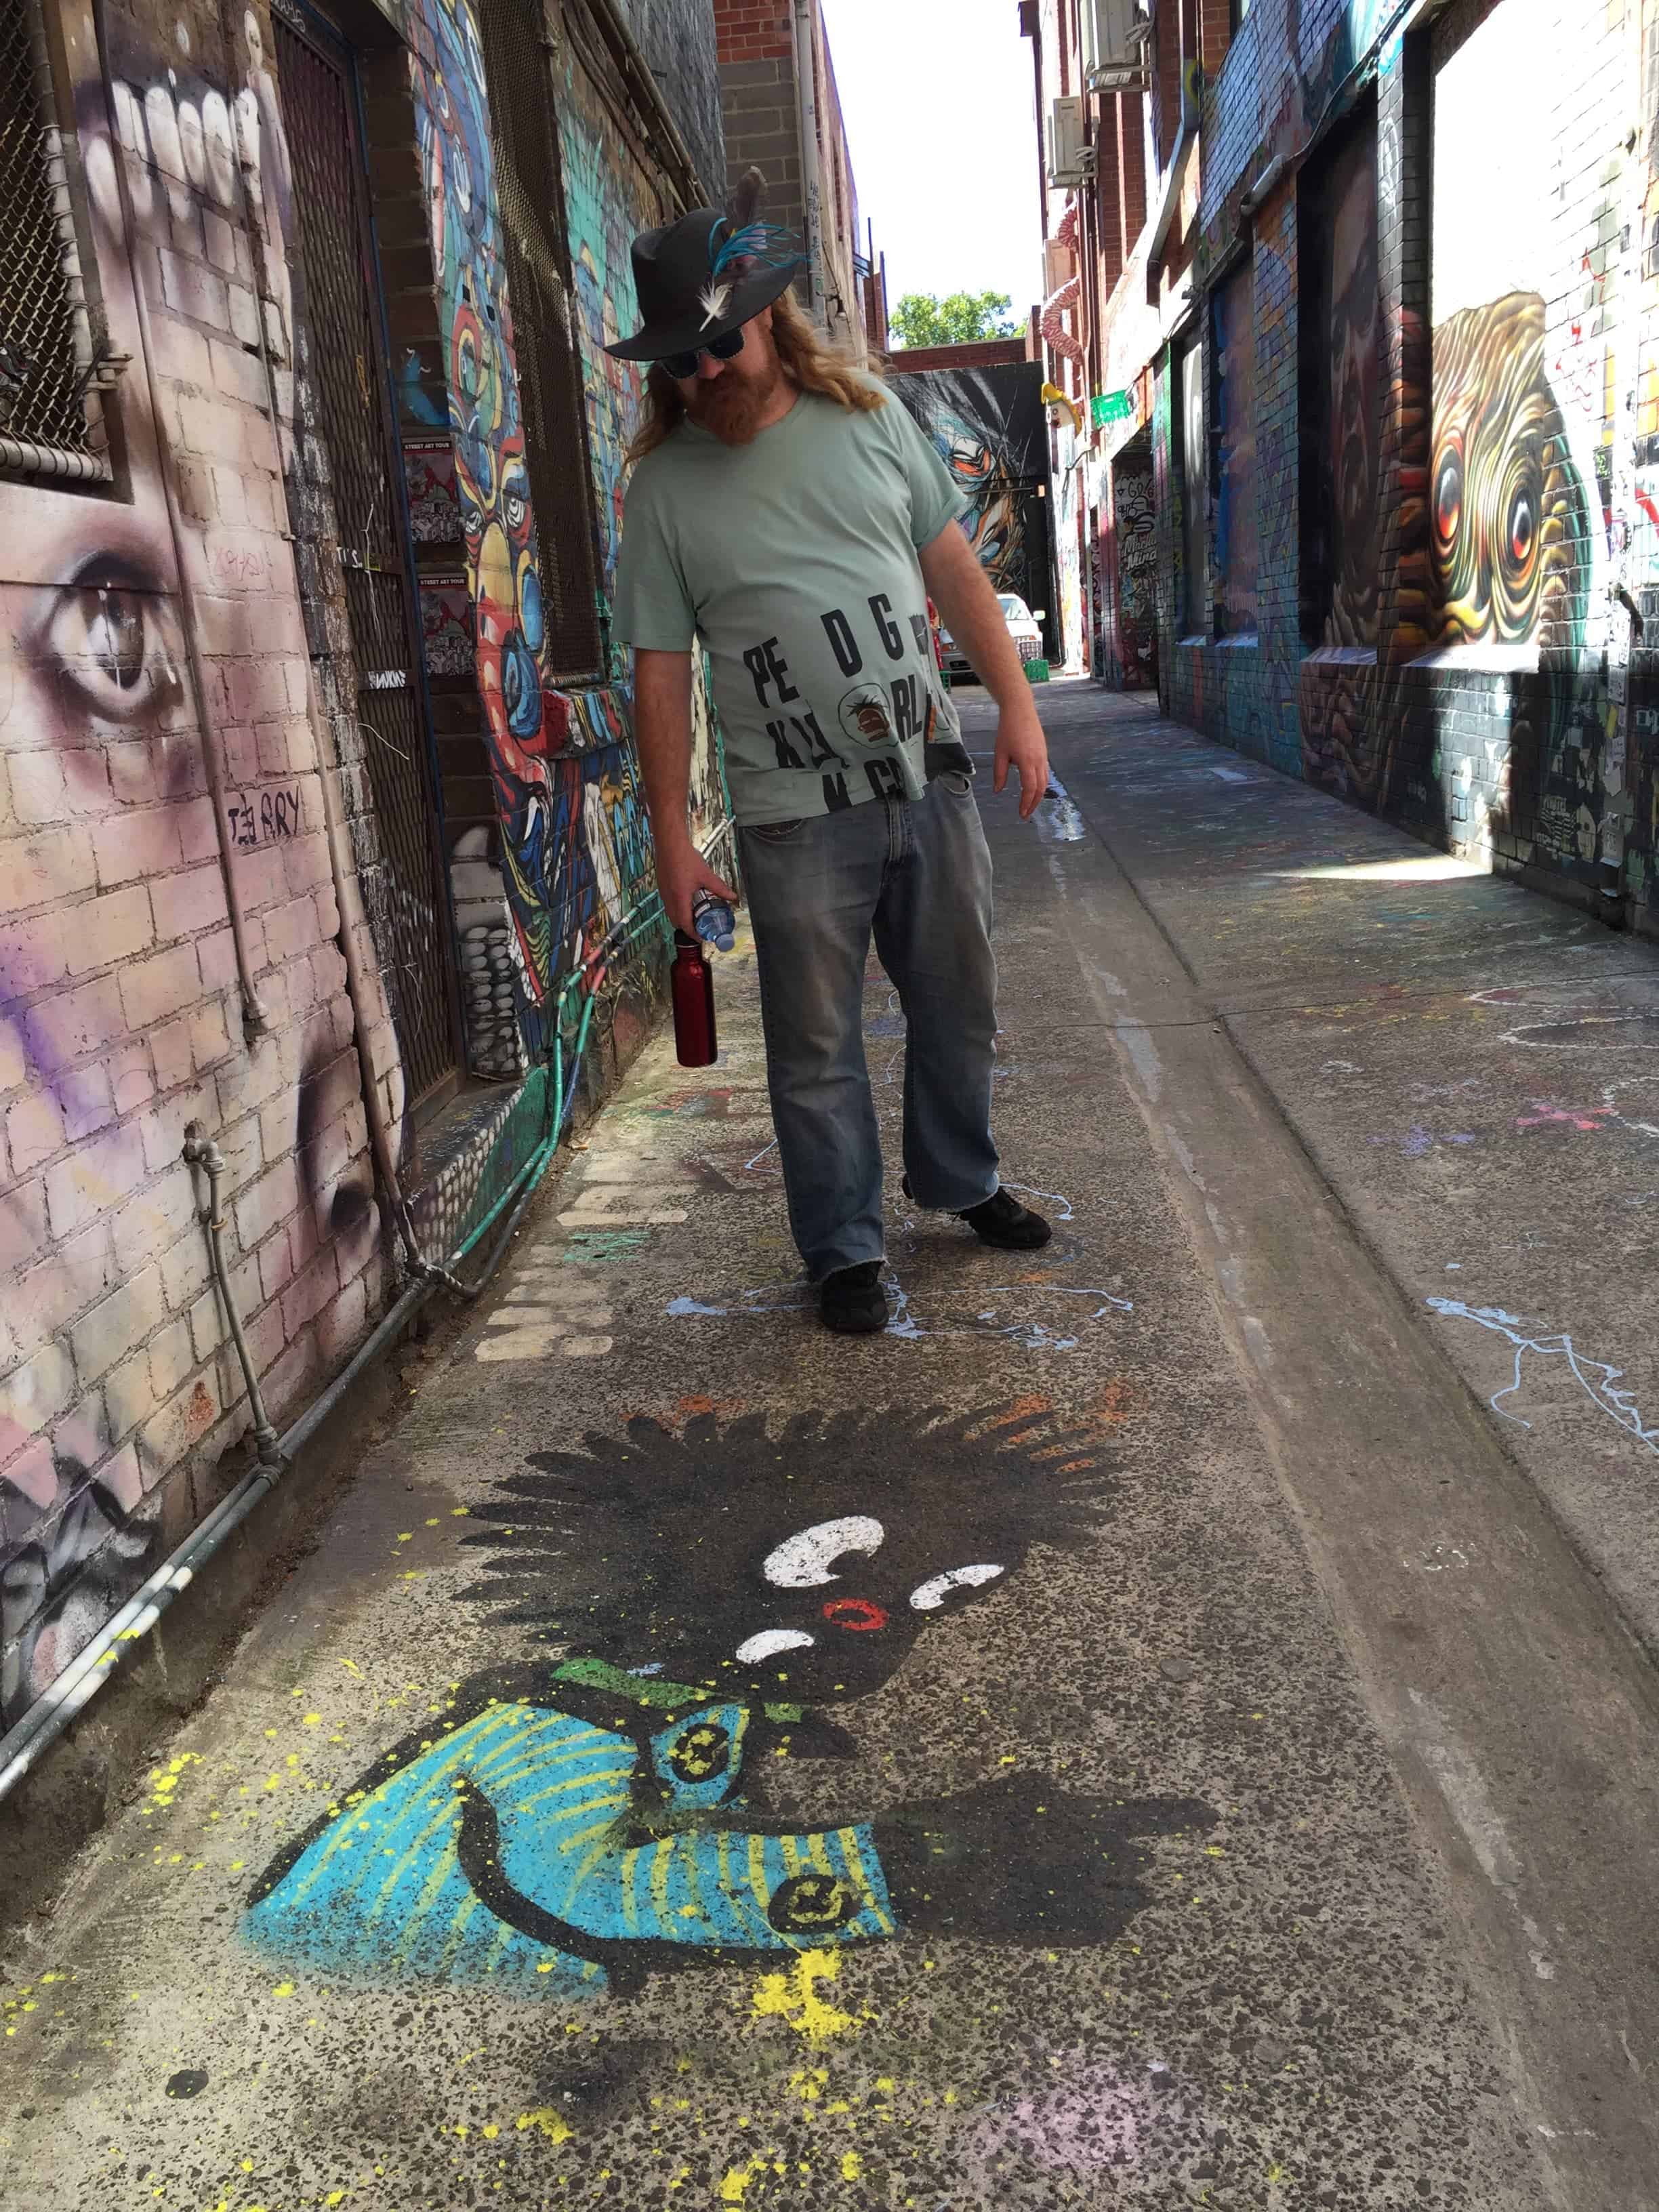 Melbourne Street Art Tours. Australia road trip